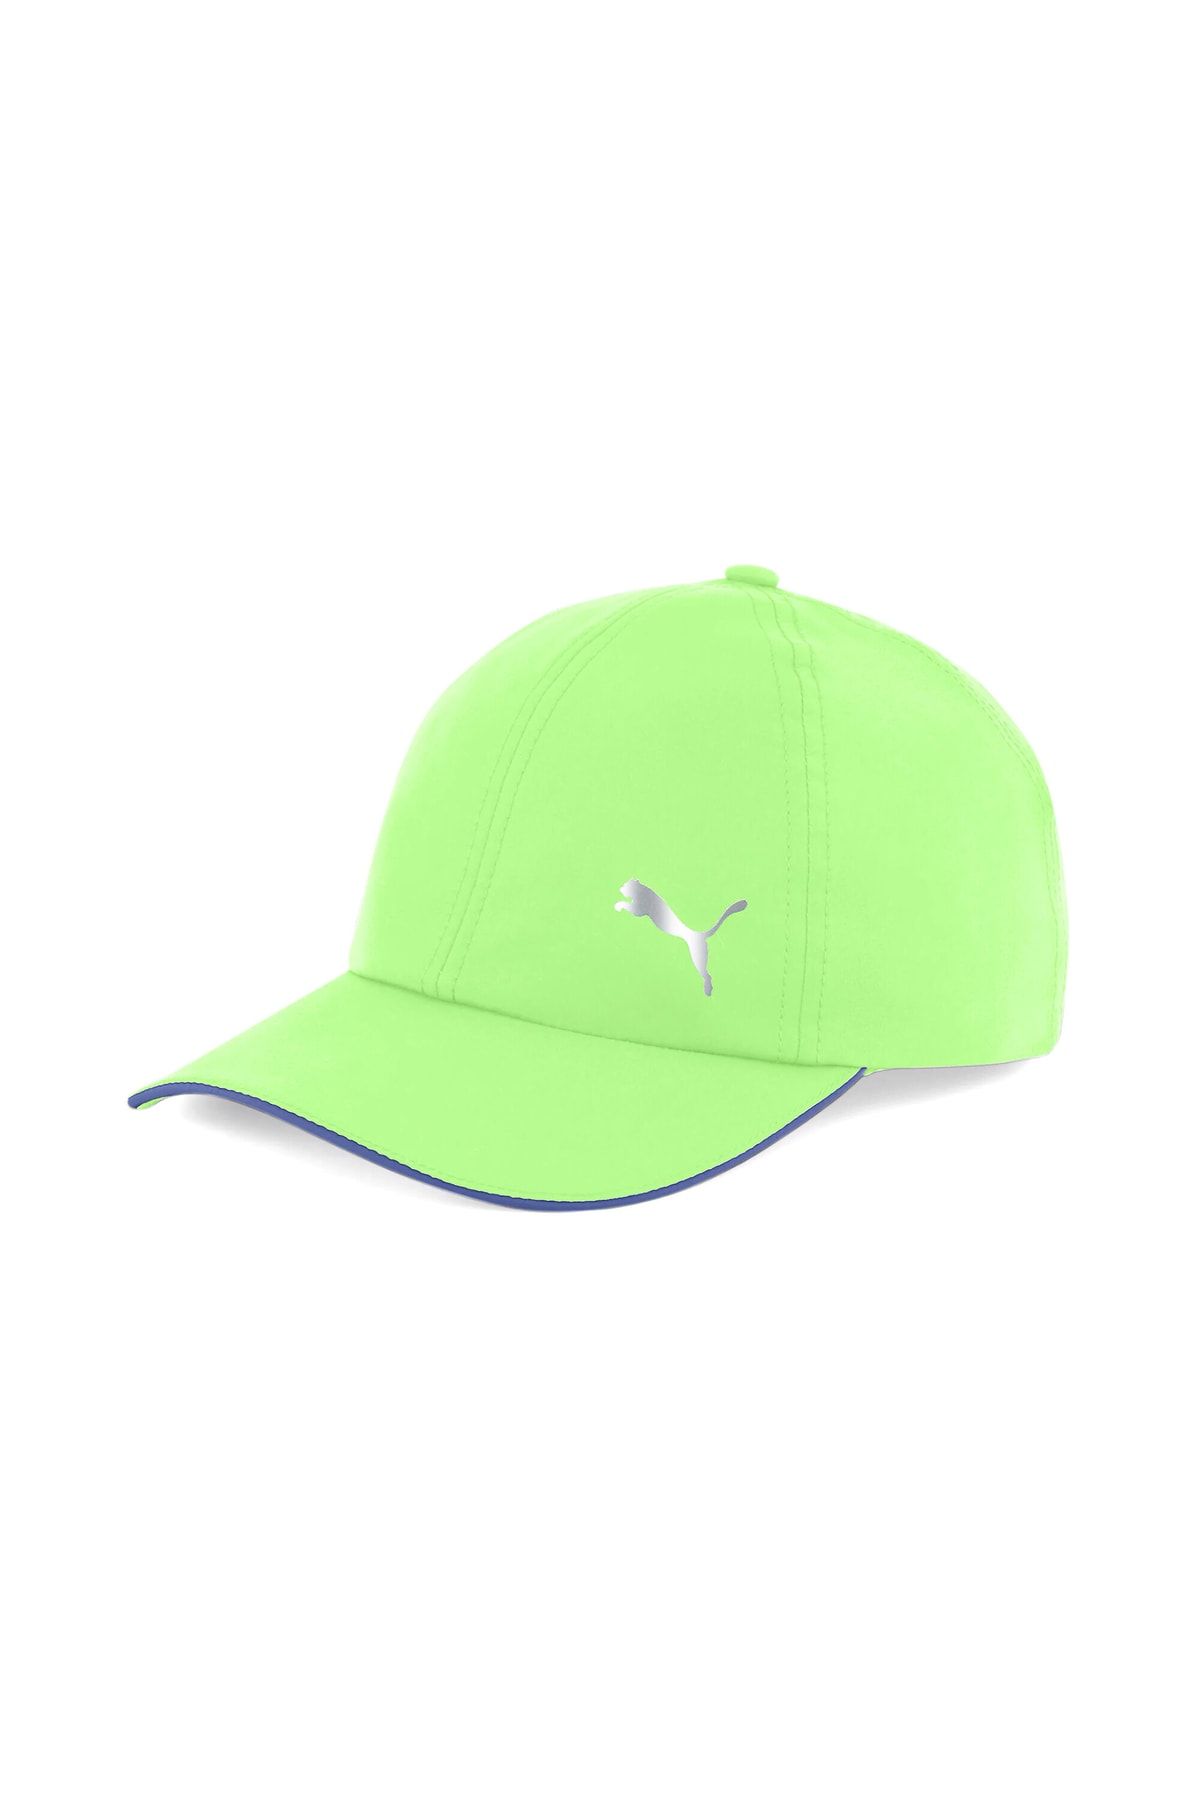 Puma Ess Running Cap Şapka 2314820 Yeşil